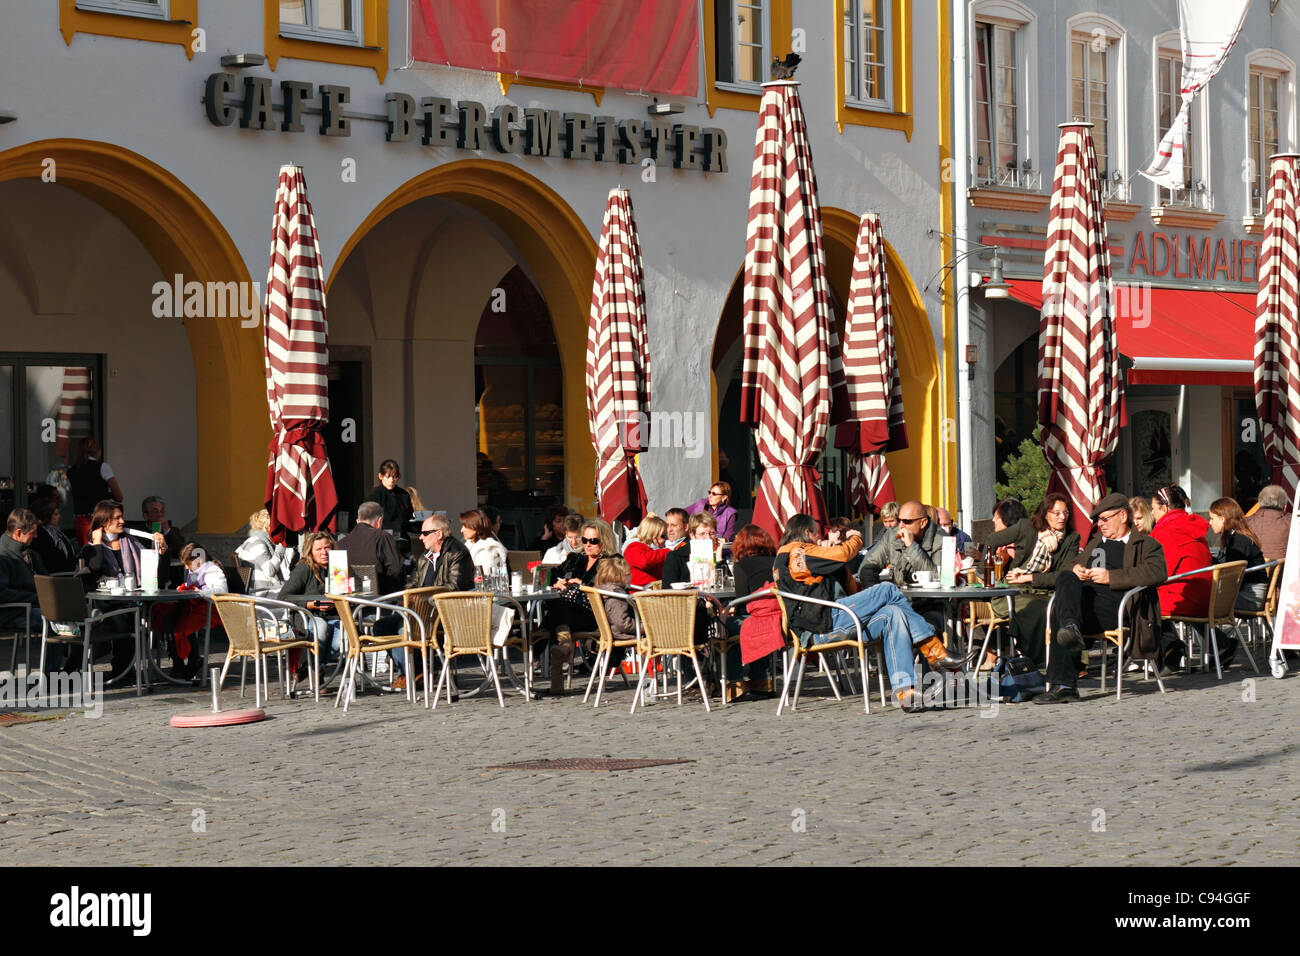 Cafe Bergmeister, Rosenheim Upper Bavaria Germany Stock Photo